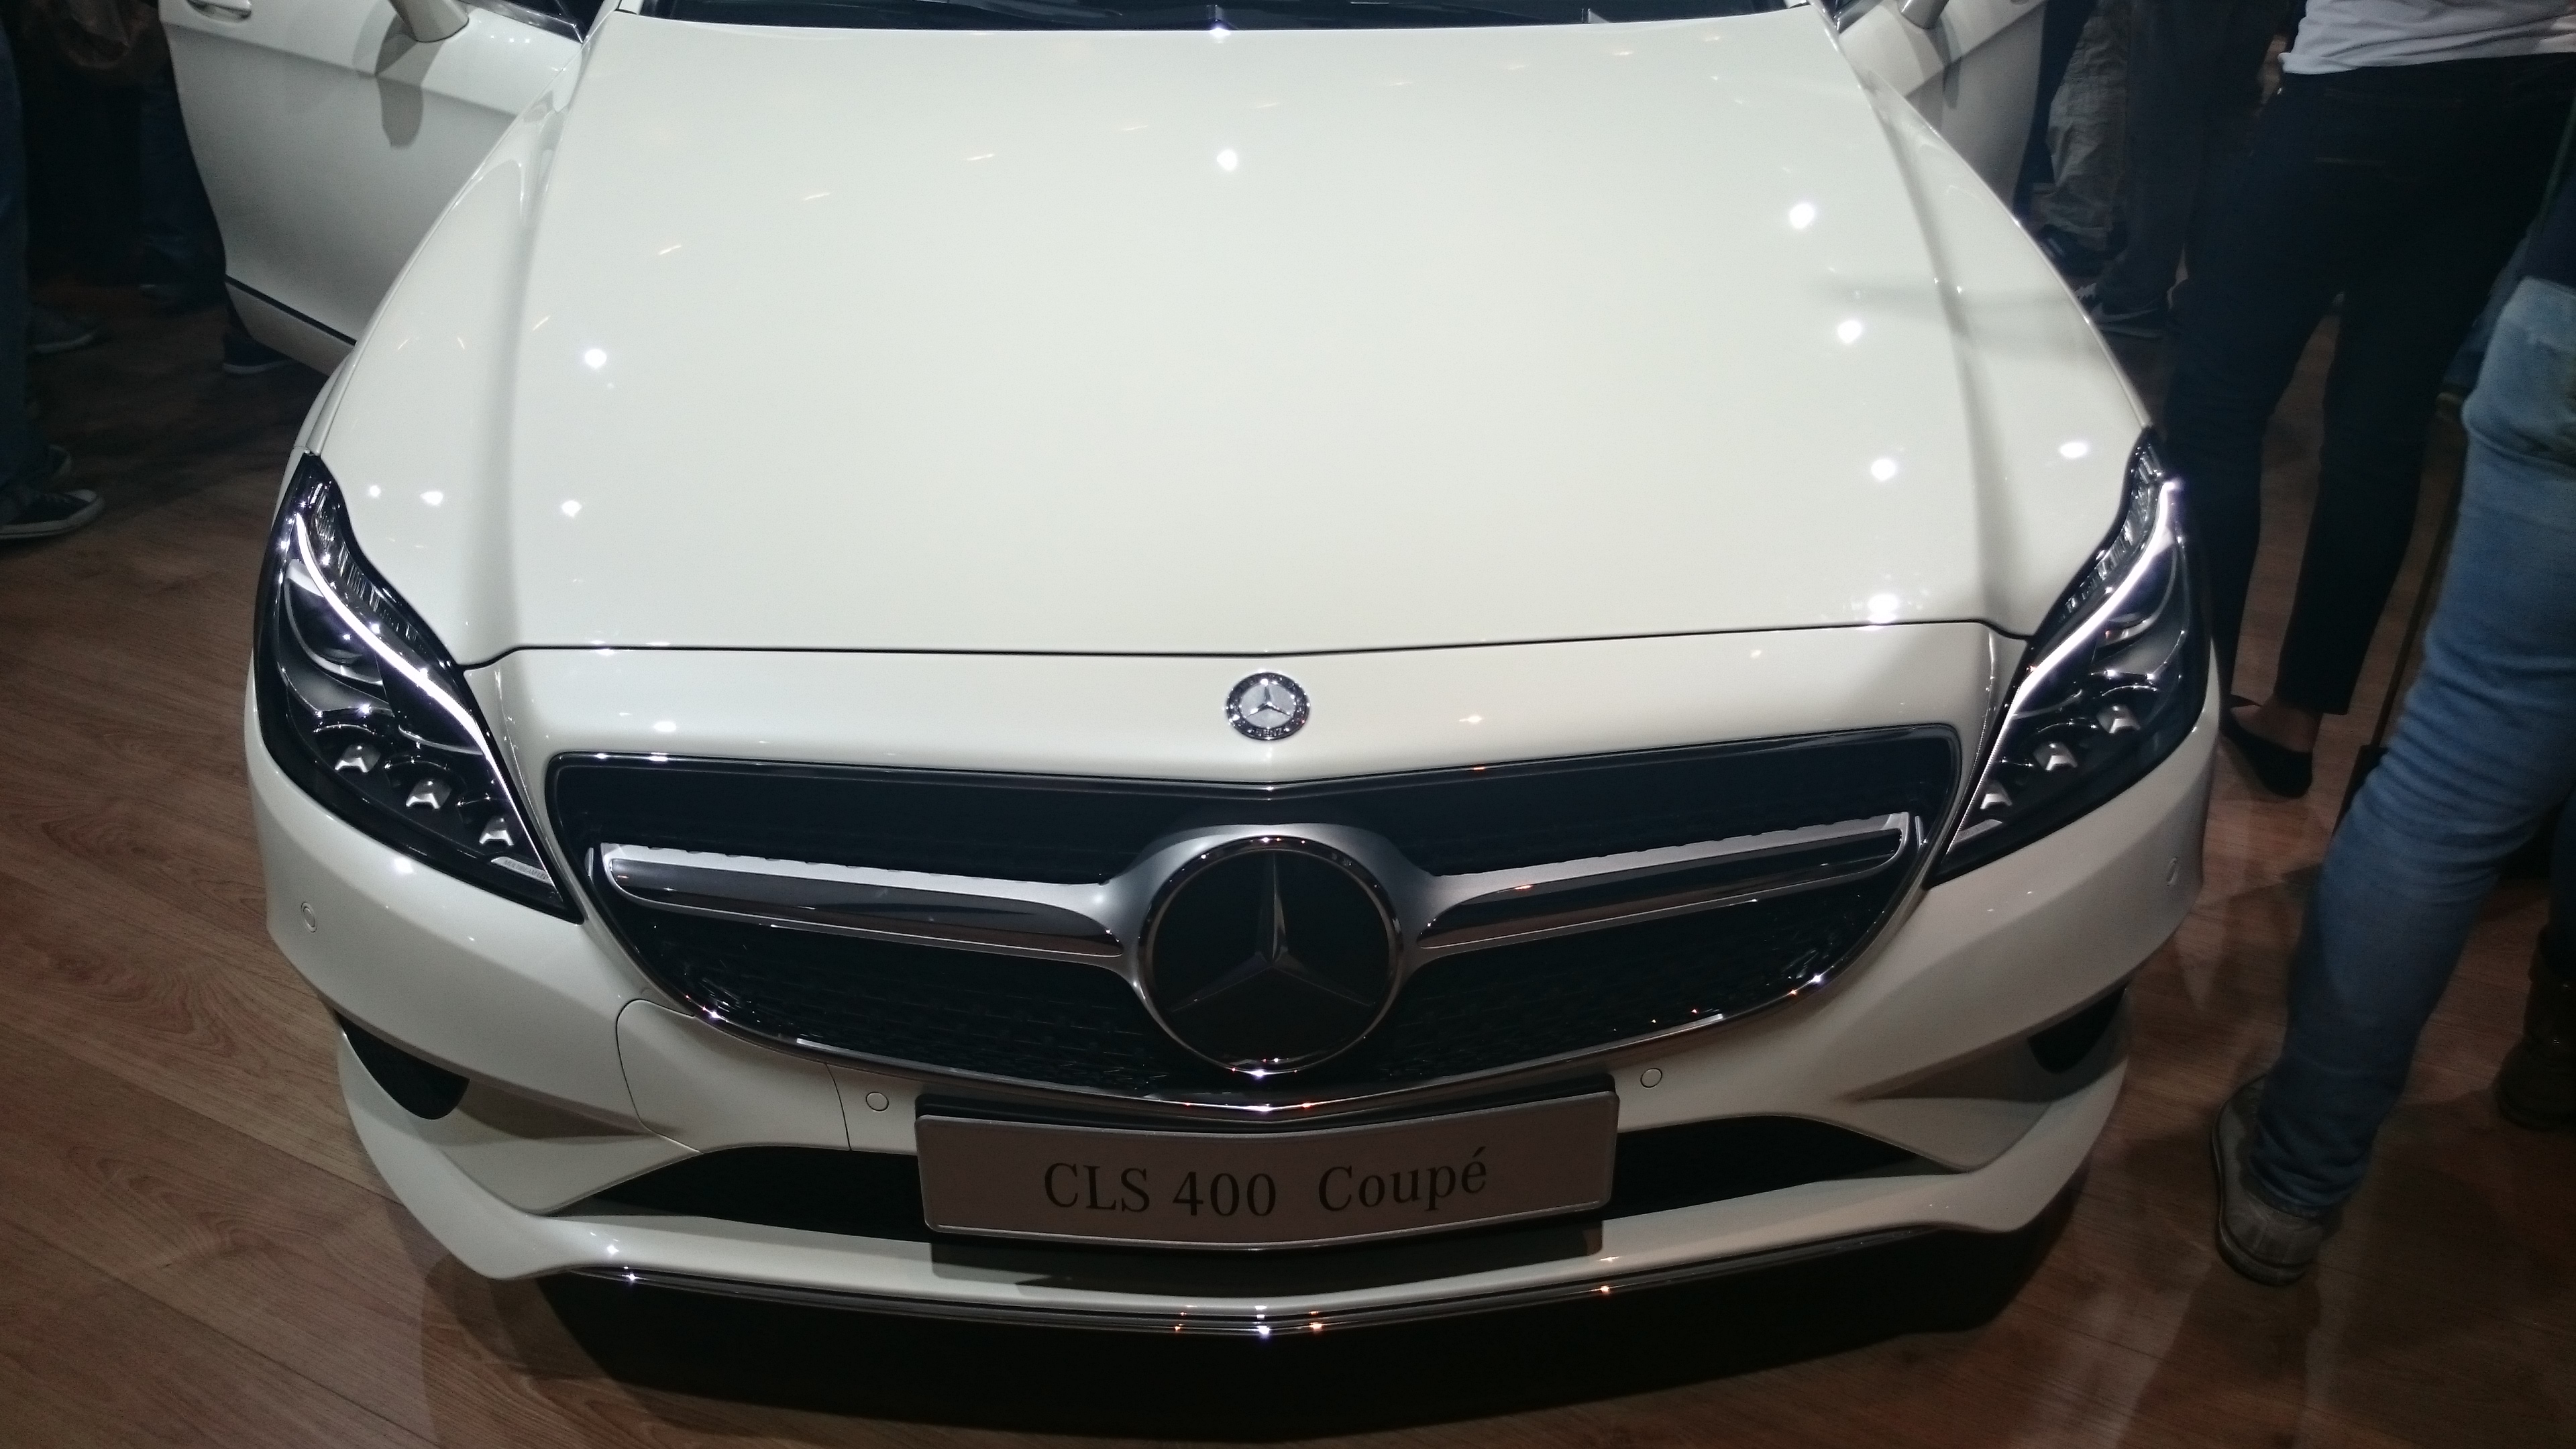 Fotos normales Mercedes CLS 400 Coupé #VidePan en #IAA2015